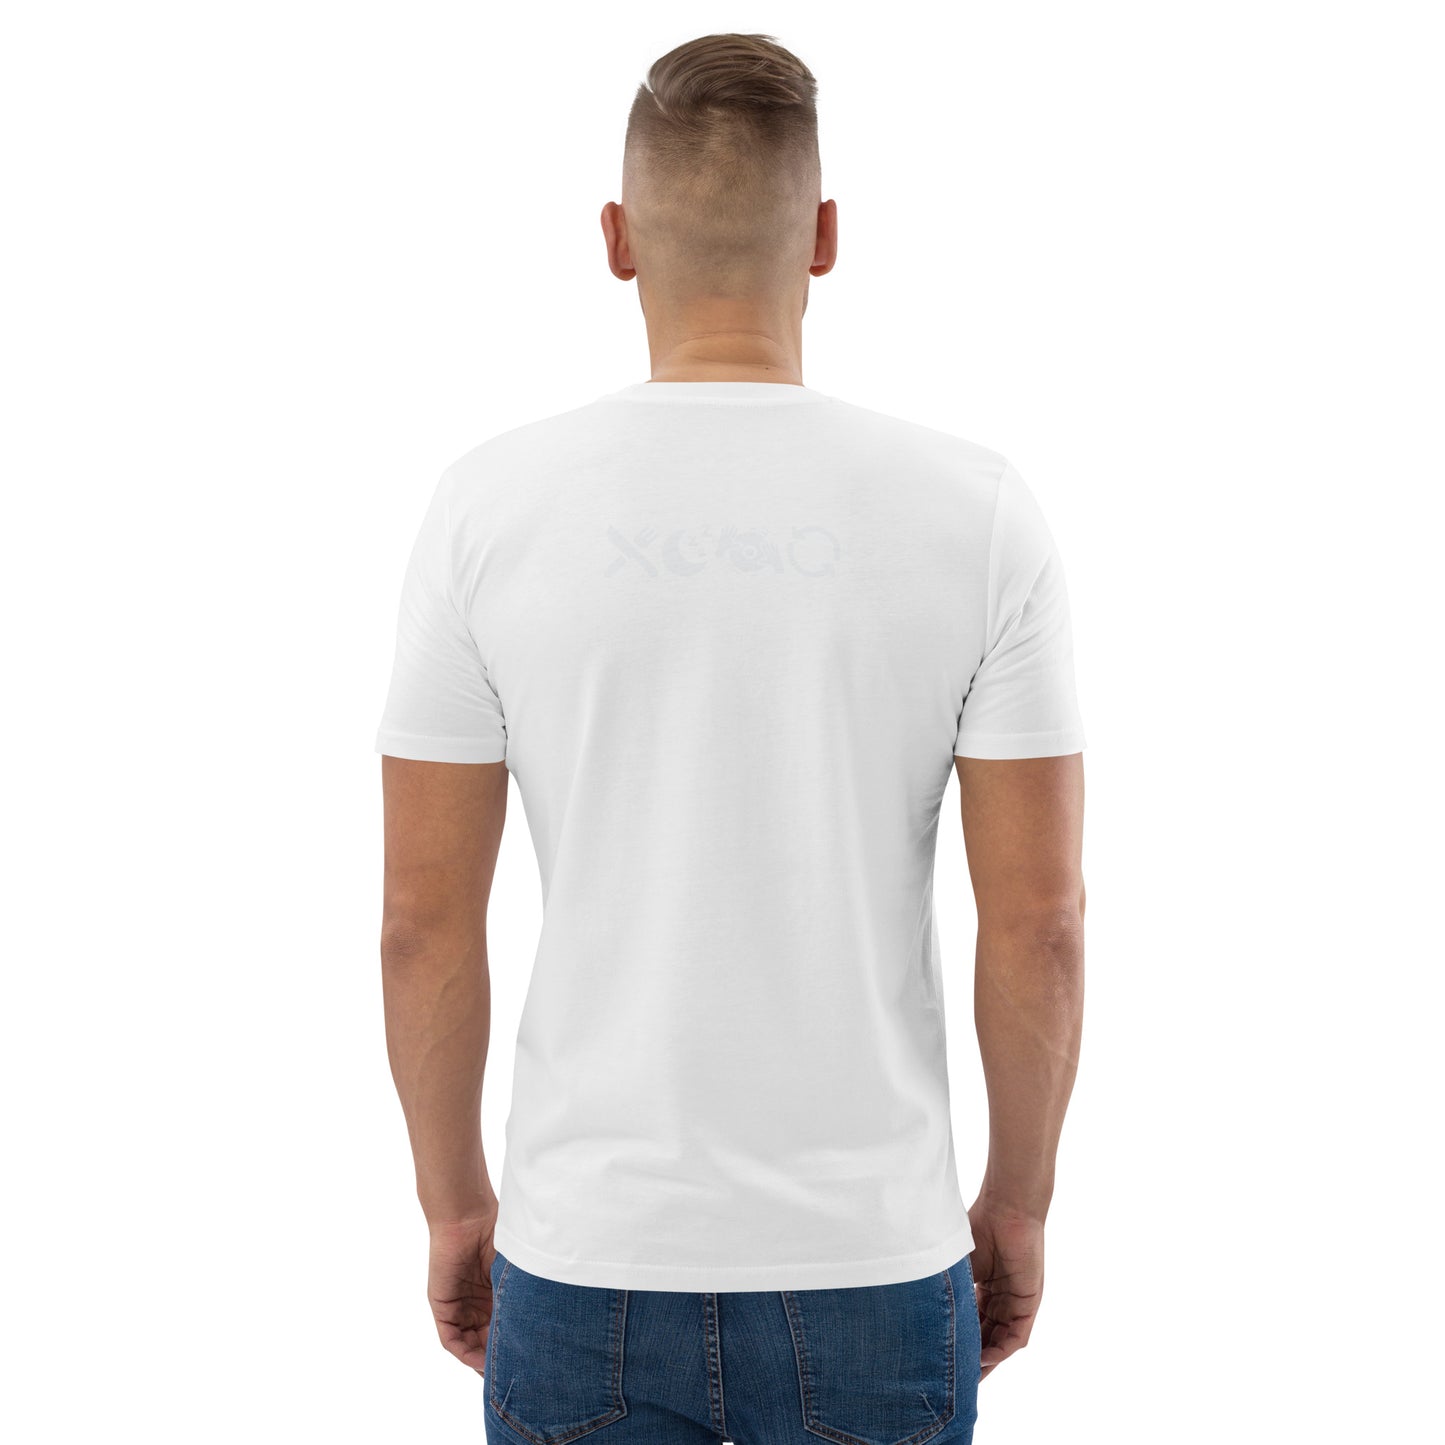 Eat Sleep Rave Repeat (icons) - Unisex T-Shirt